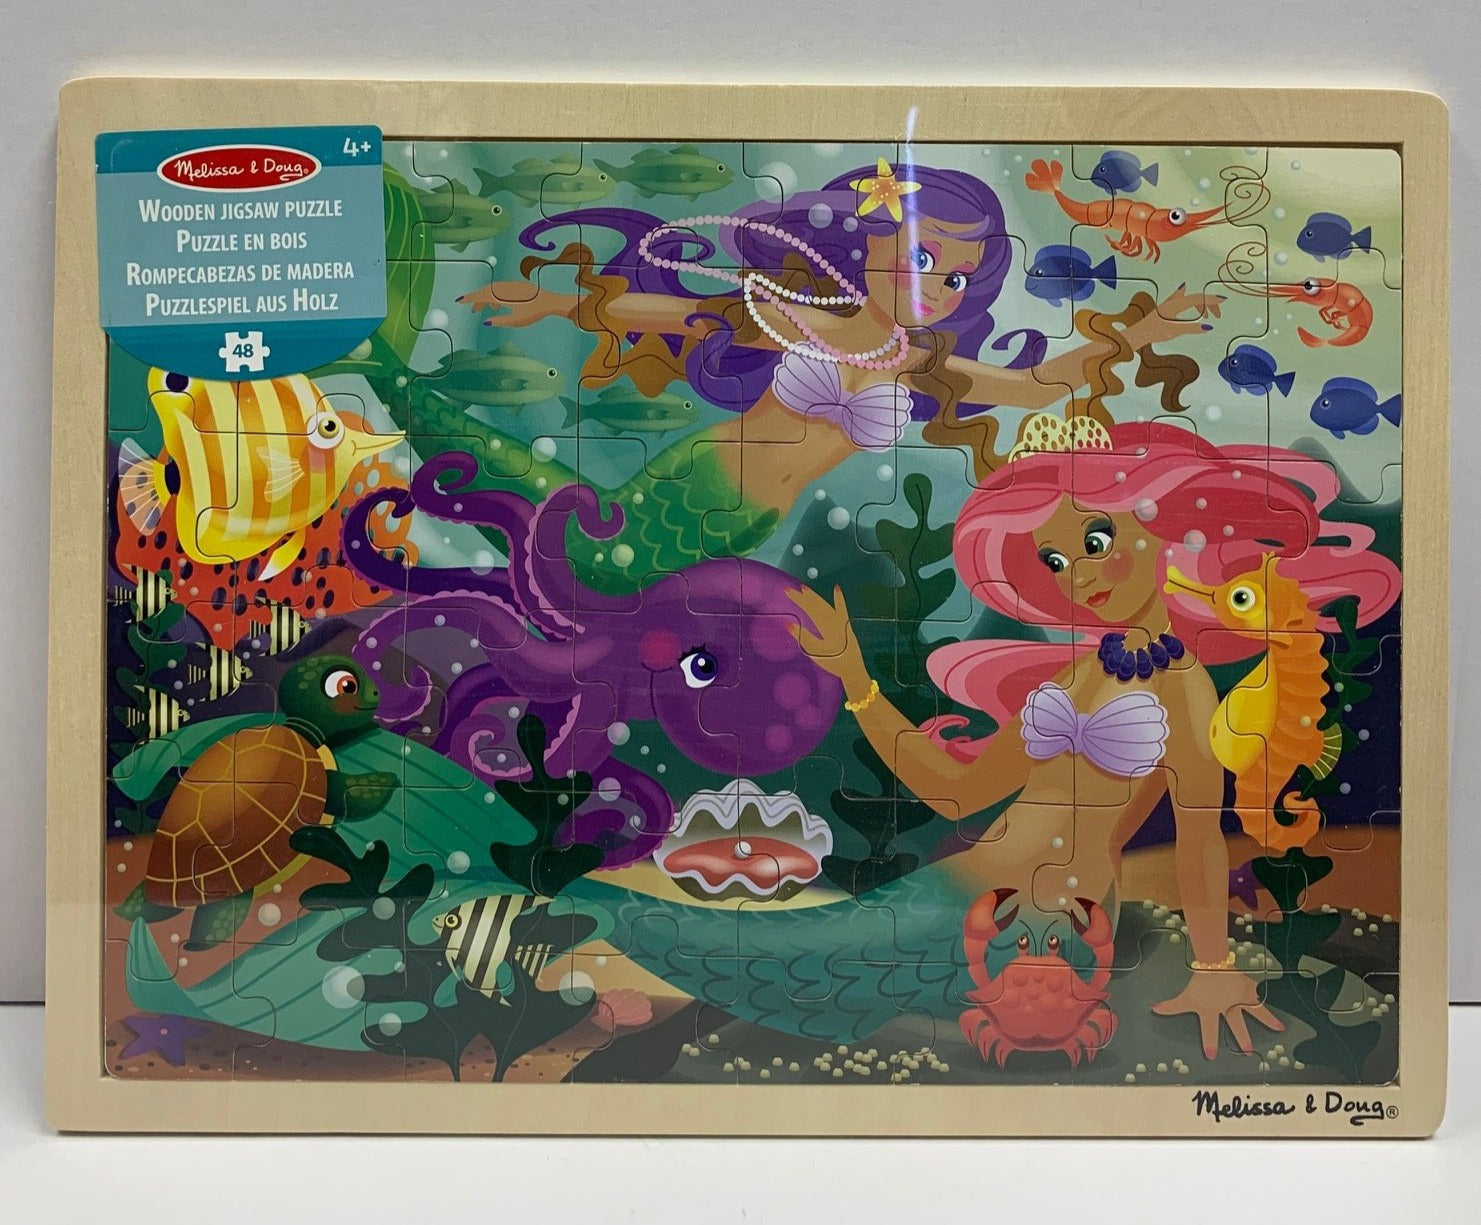 Melissa & Doug Wooden Jigsaw Puzzle: Mermaids